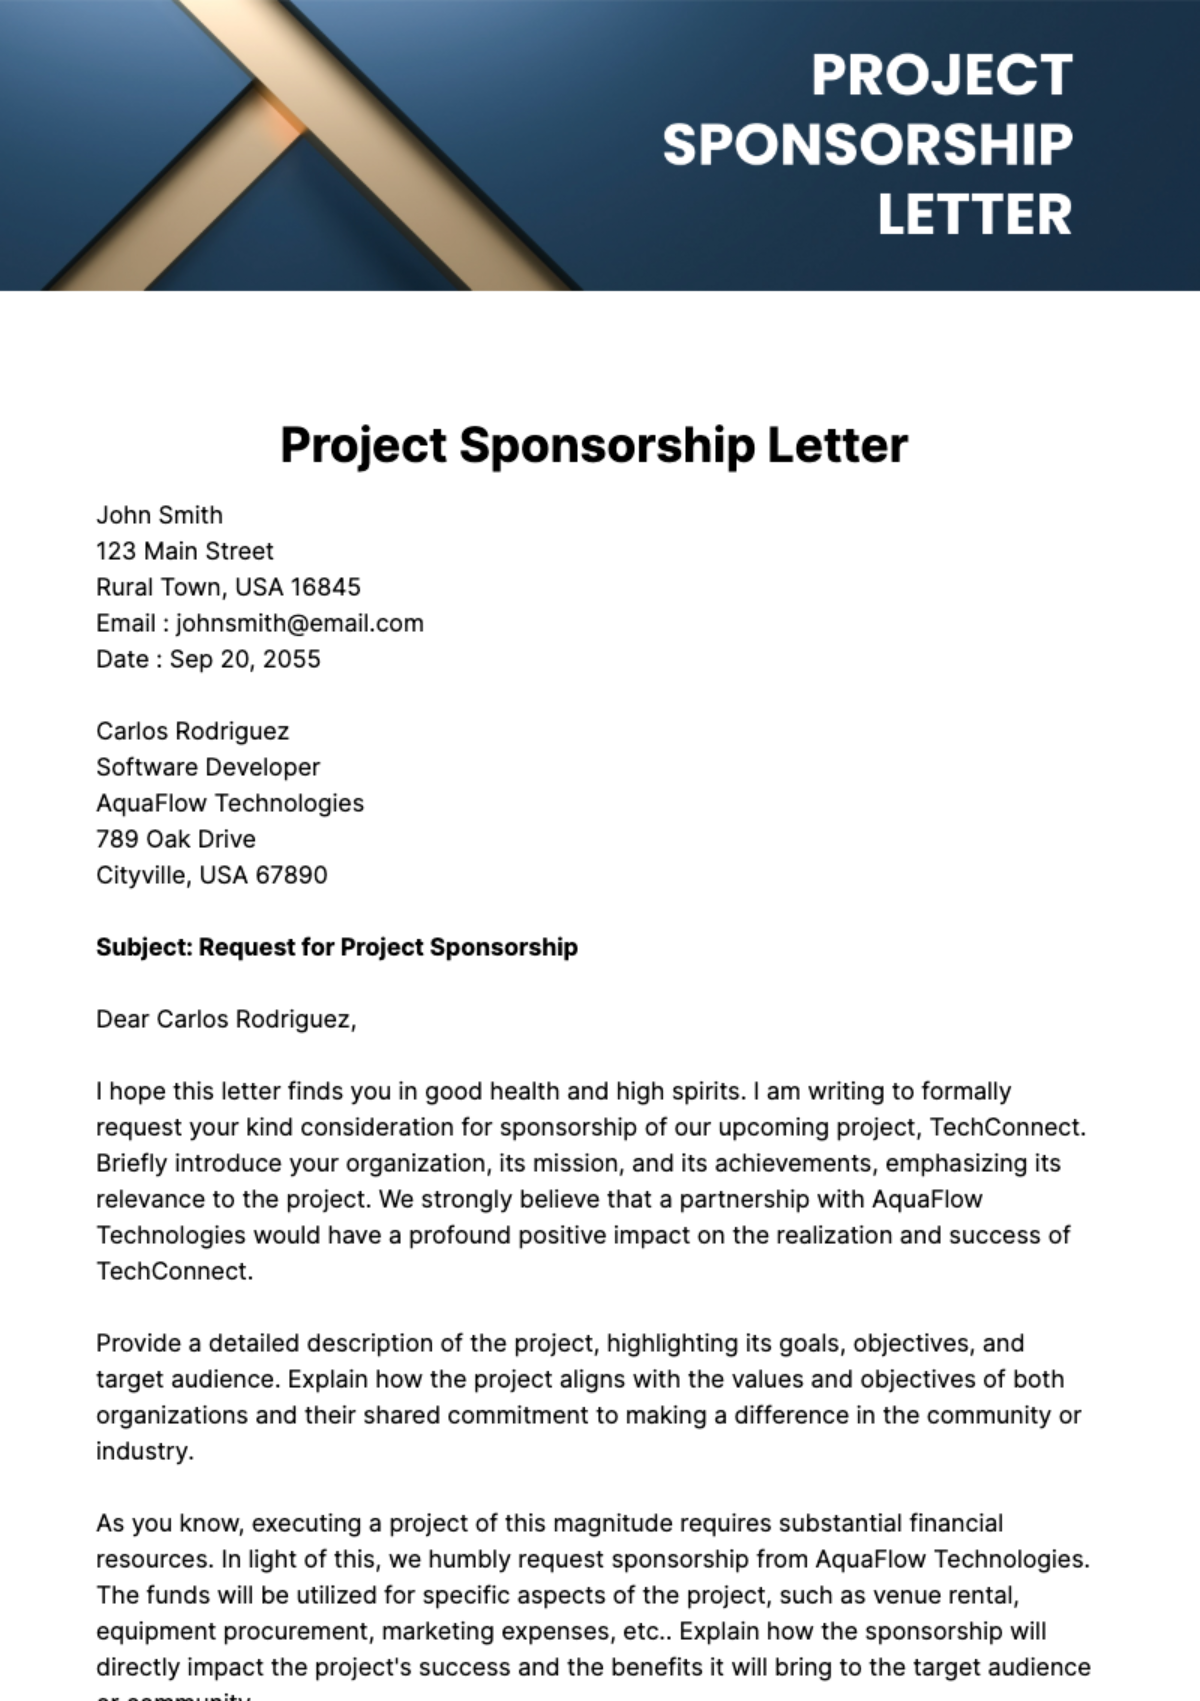 Project Sponsorship Letter Template